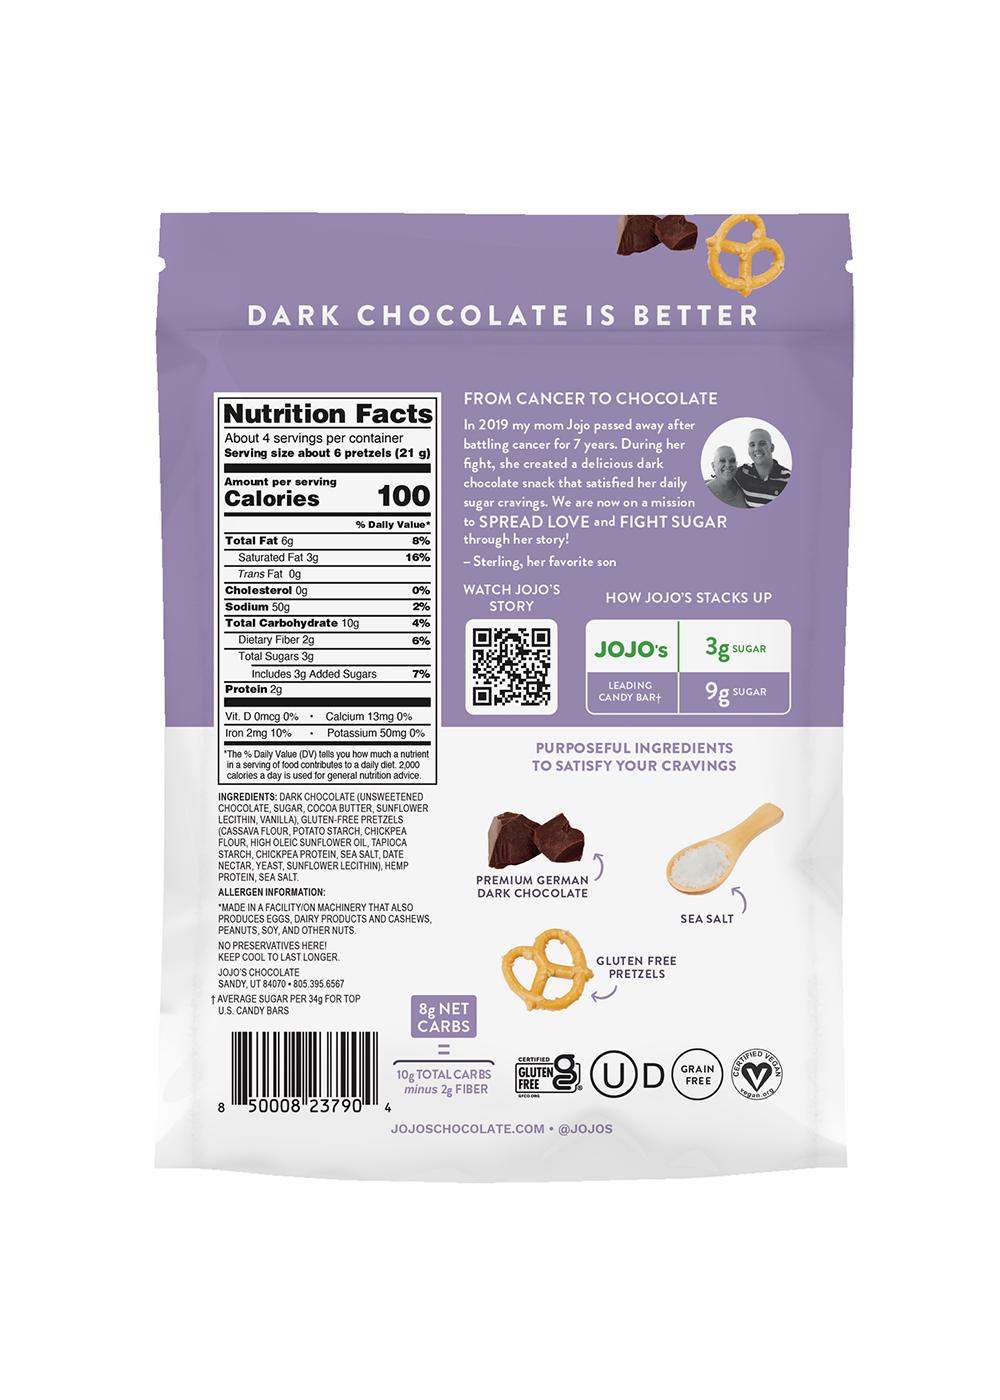 Skinny Girl Nutrition Bar Dark Chocolate Pretzel - Shop Diet & Fitness at  H-E-B